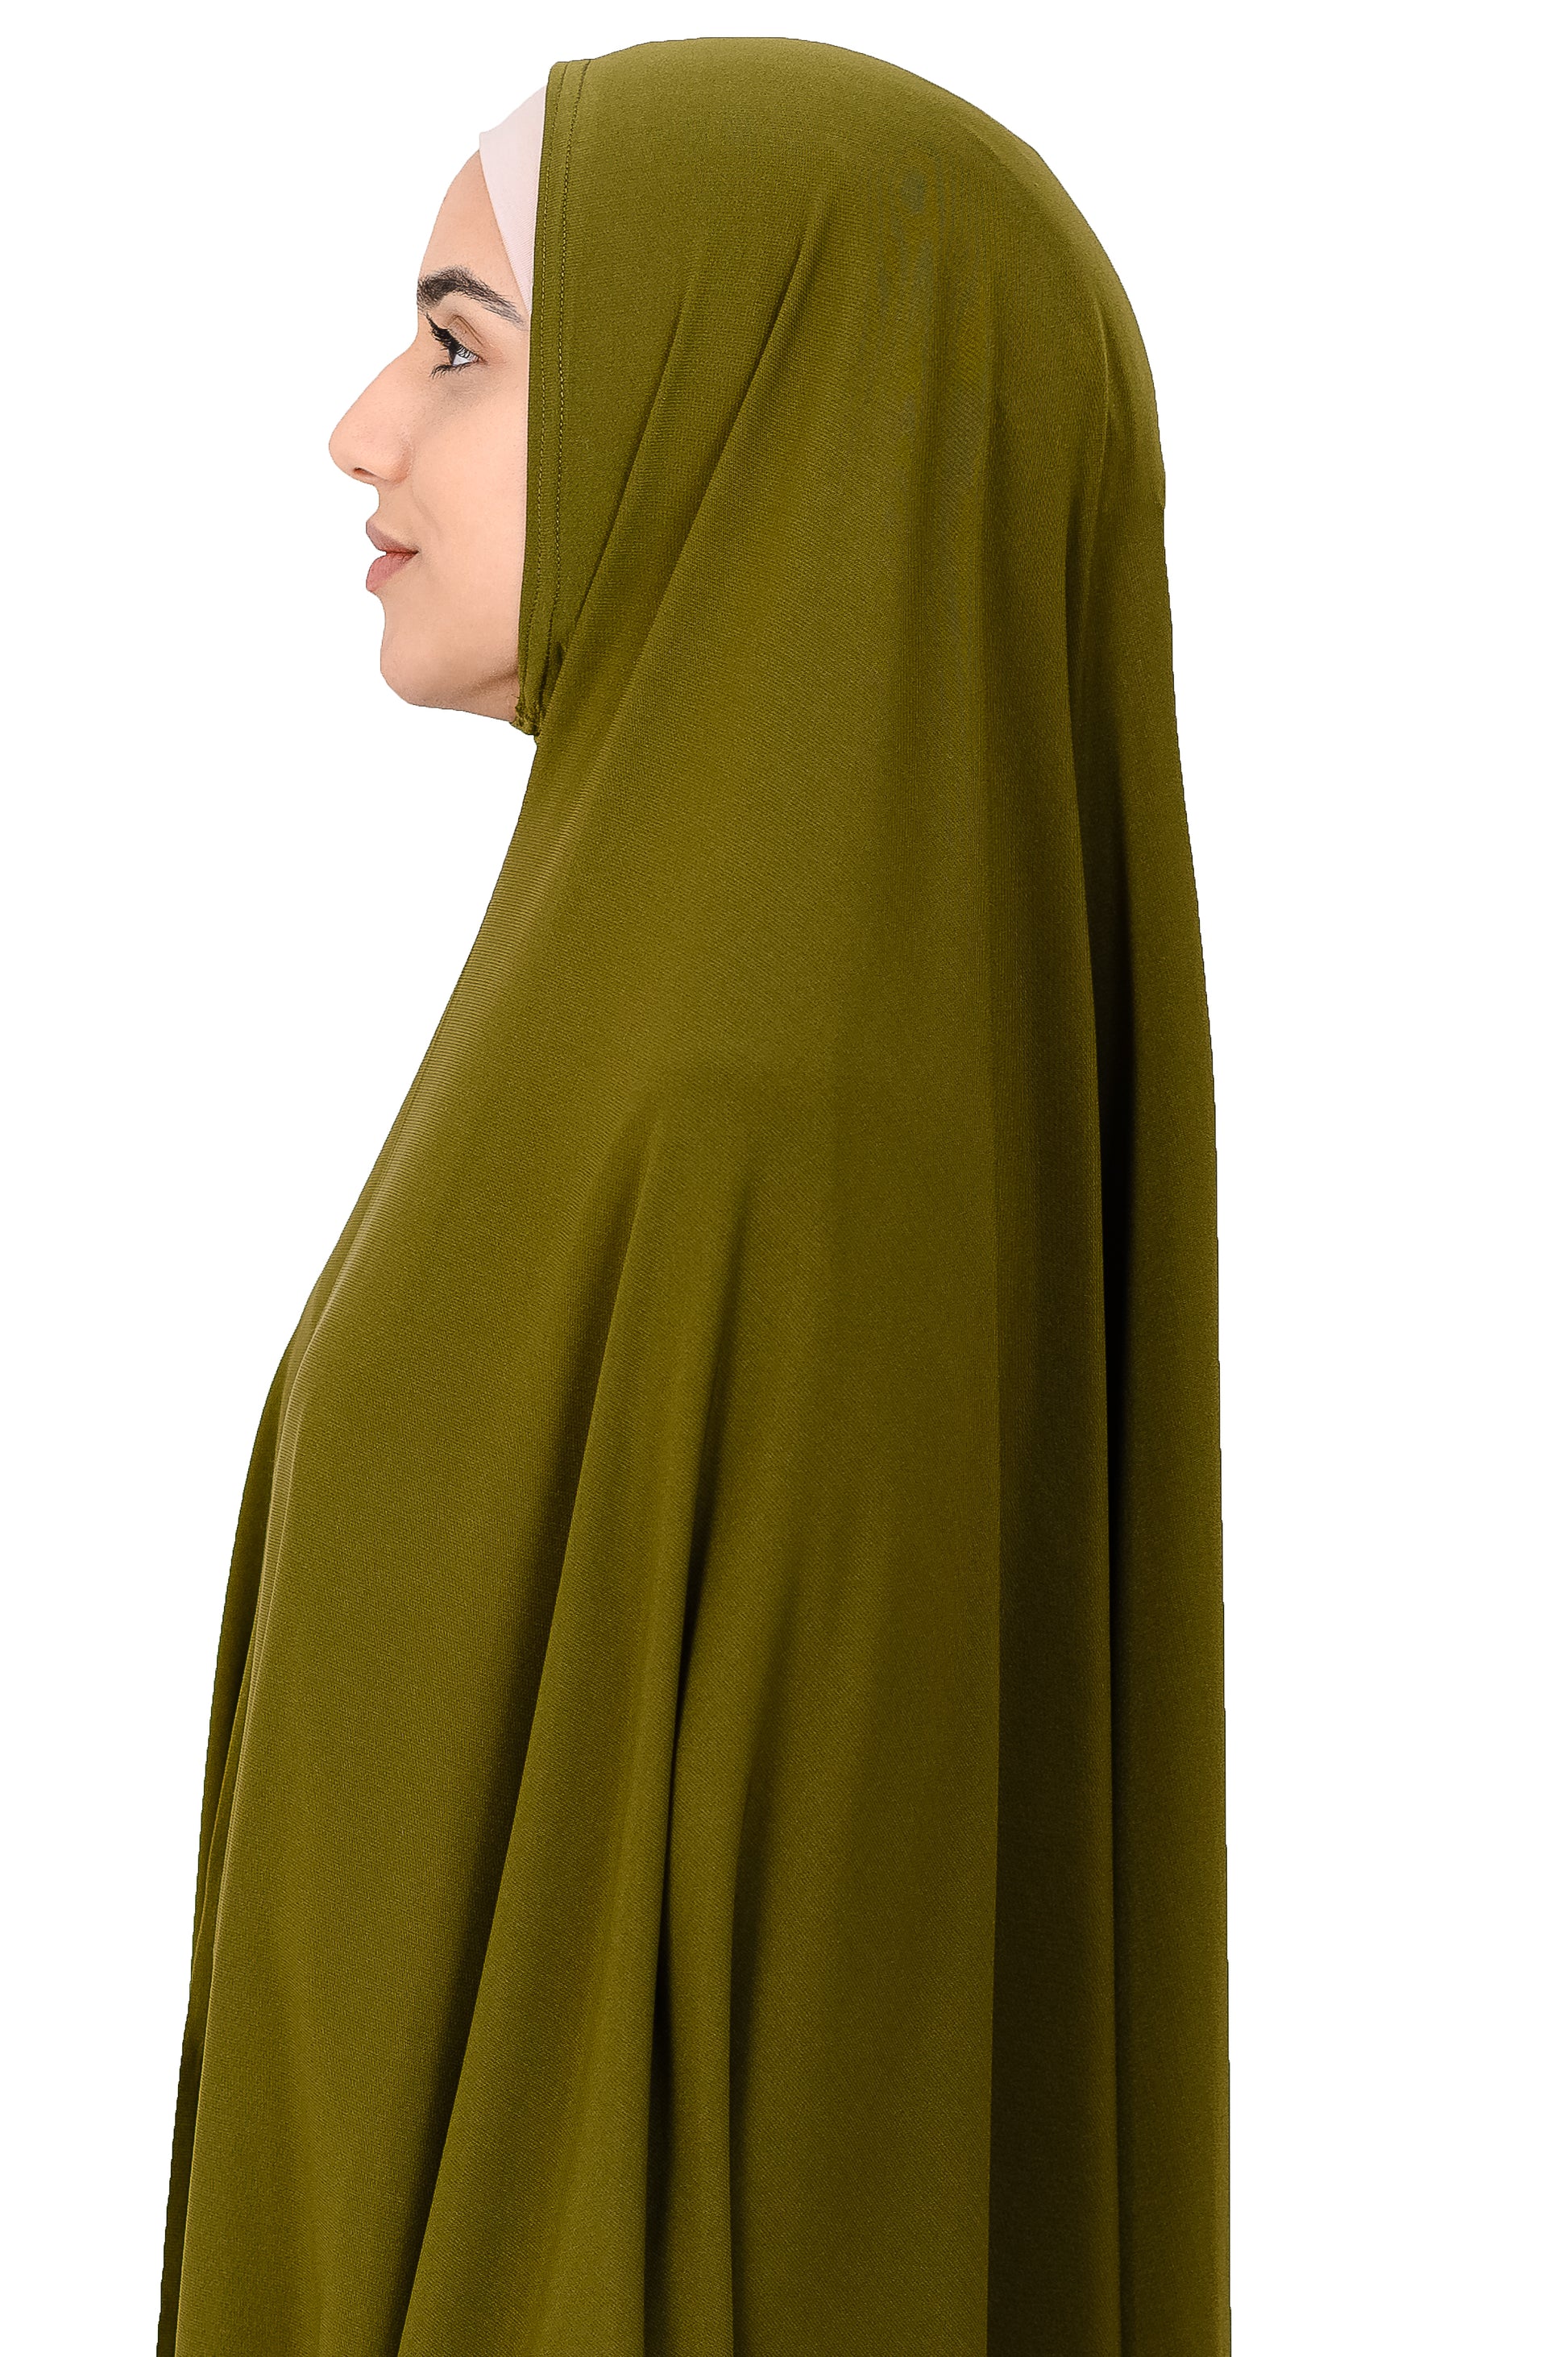 Standard Length Sleeved Jelbab in Khaki - Behind The Veil